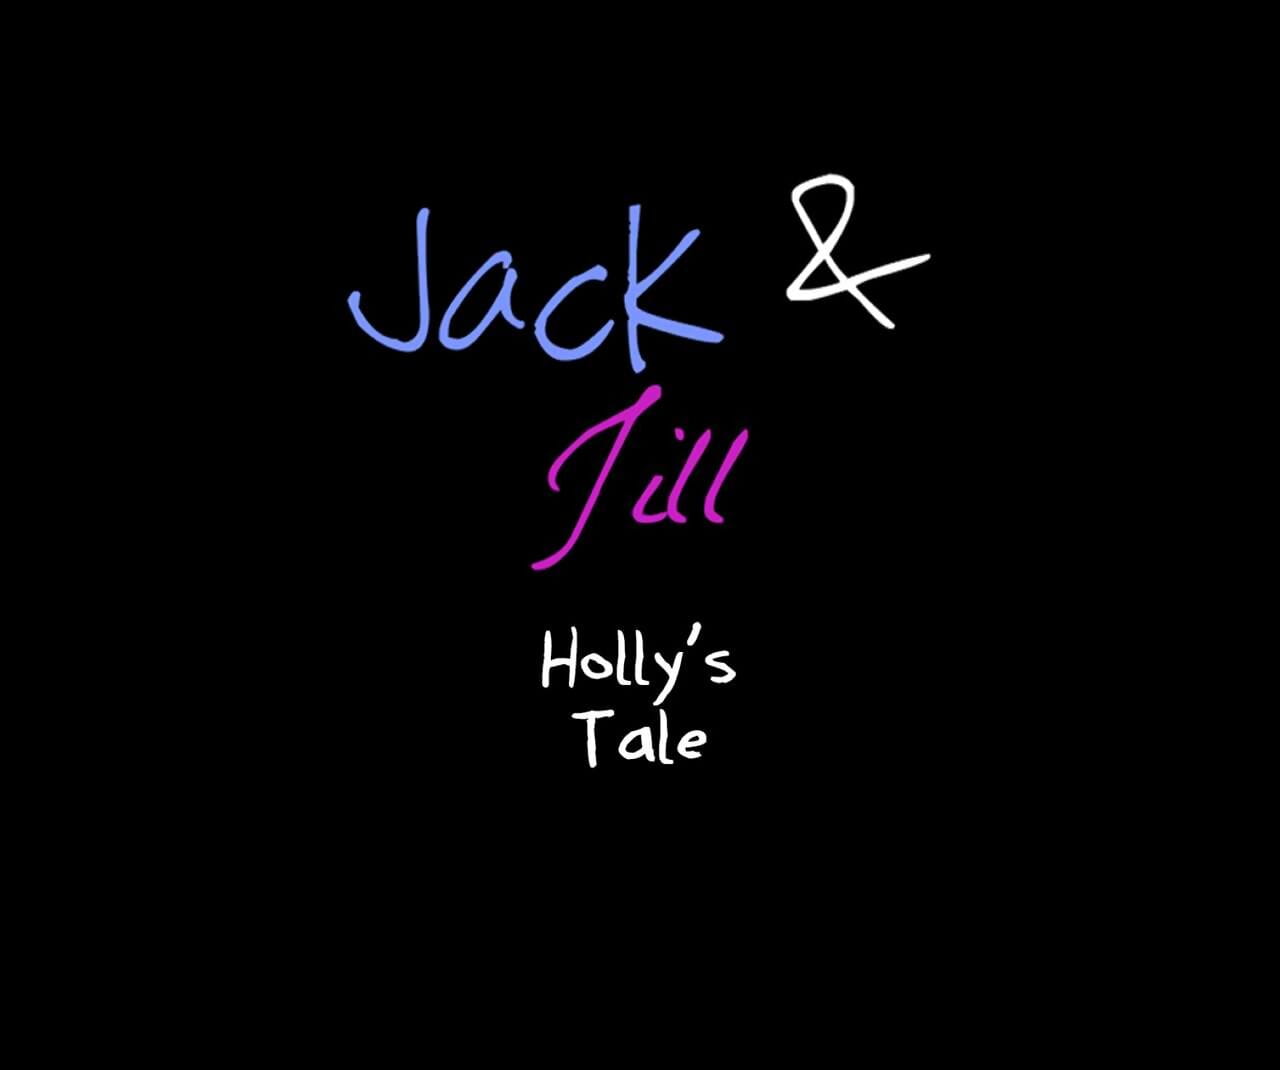 jack e jill Hollys racconto page 1